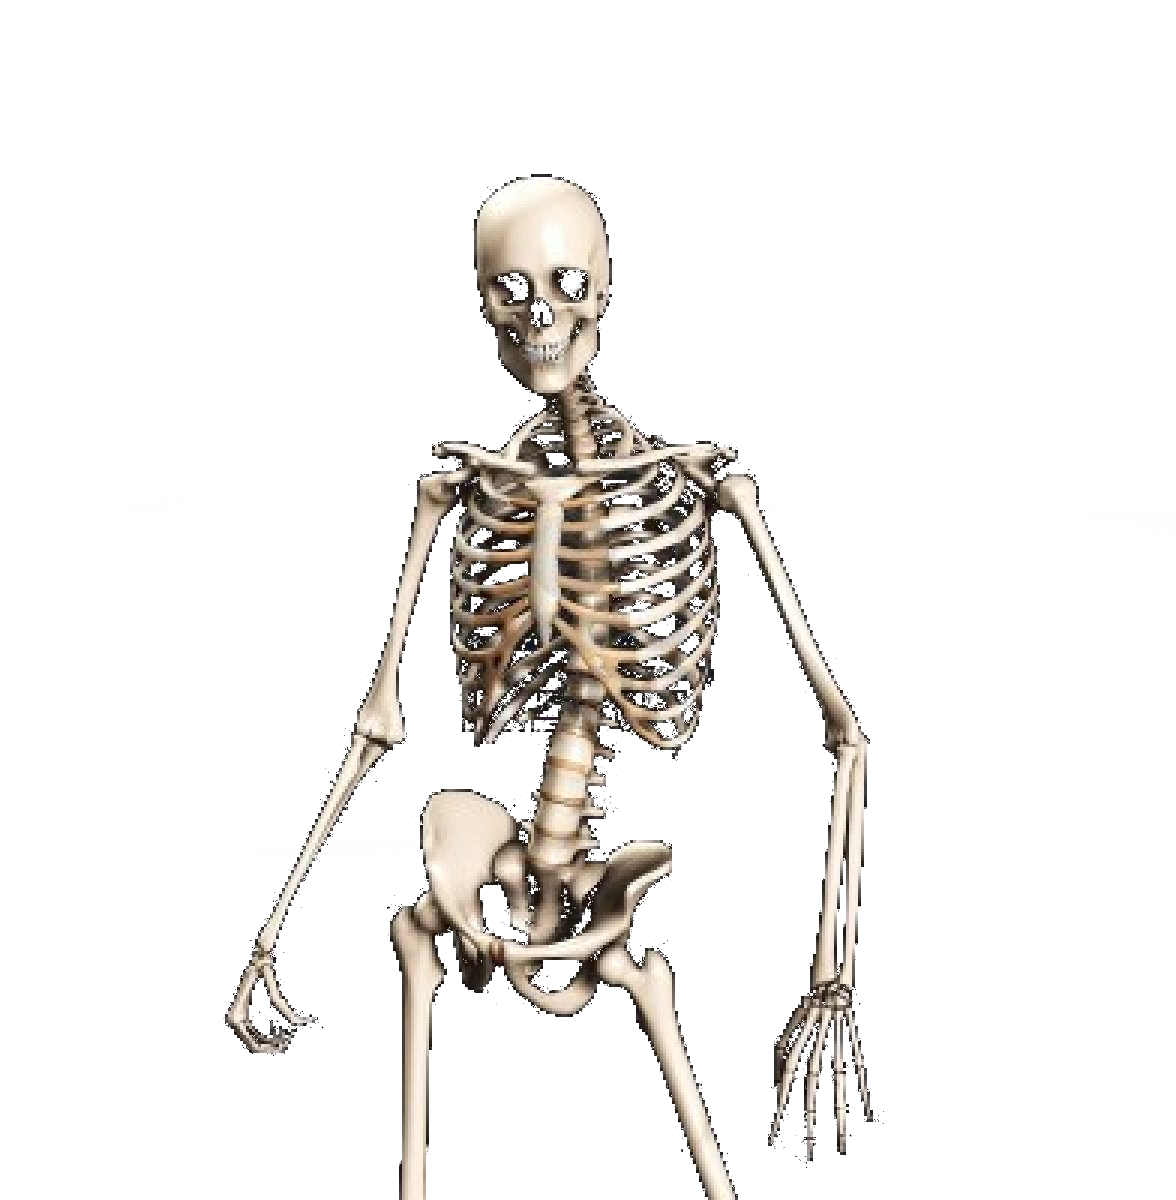 Anatomy Axial Skeleton Human Skeleton 206 Bones Labeled Hd Png | Images ...